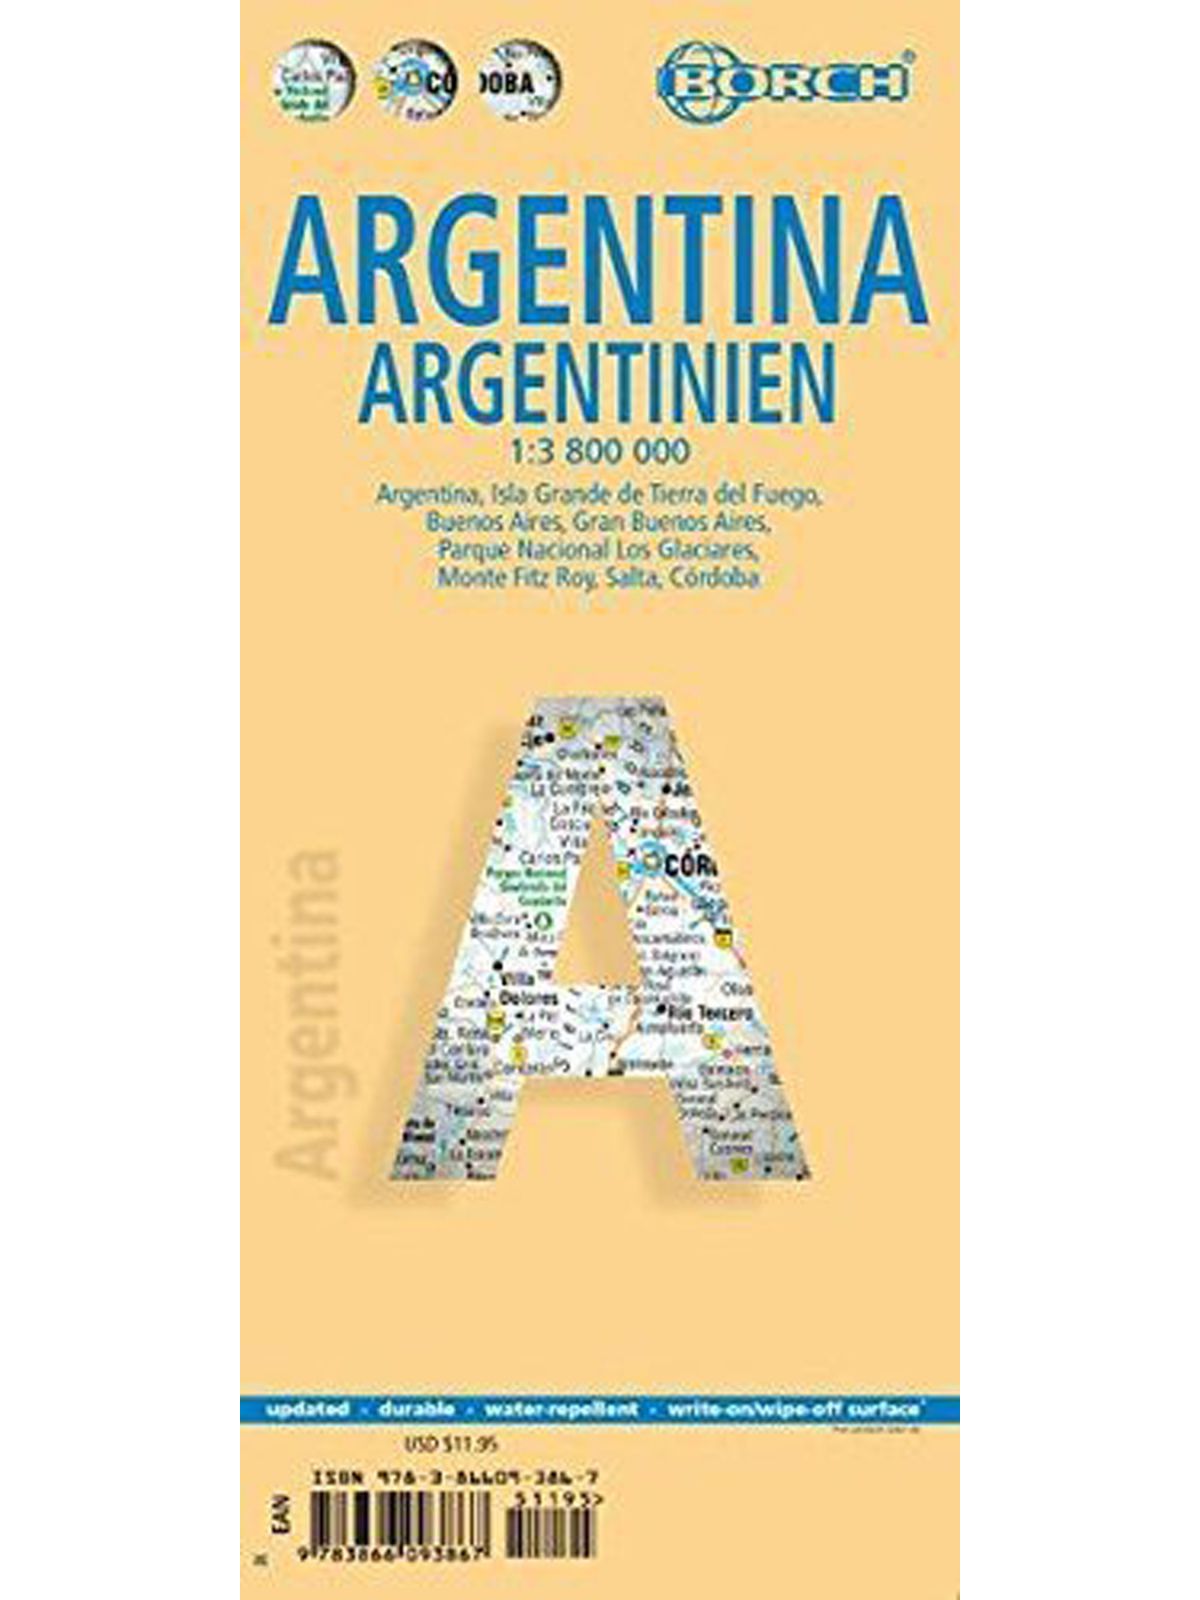 ARGENTINA BORCH MAP BORCH Купить Книгу на Английском